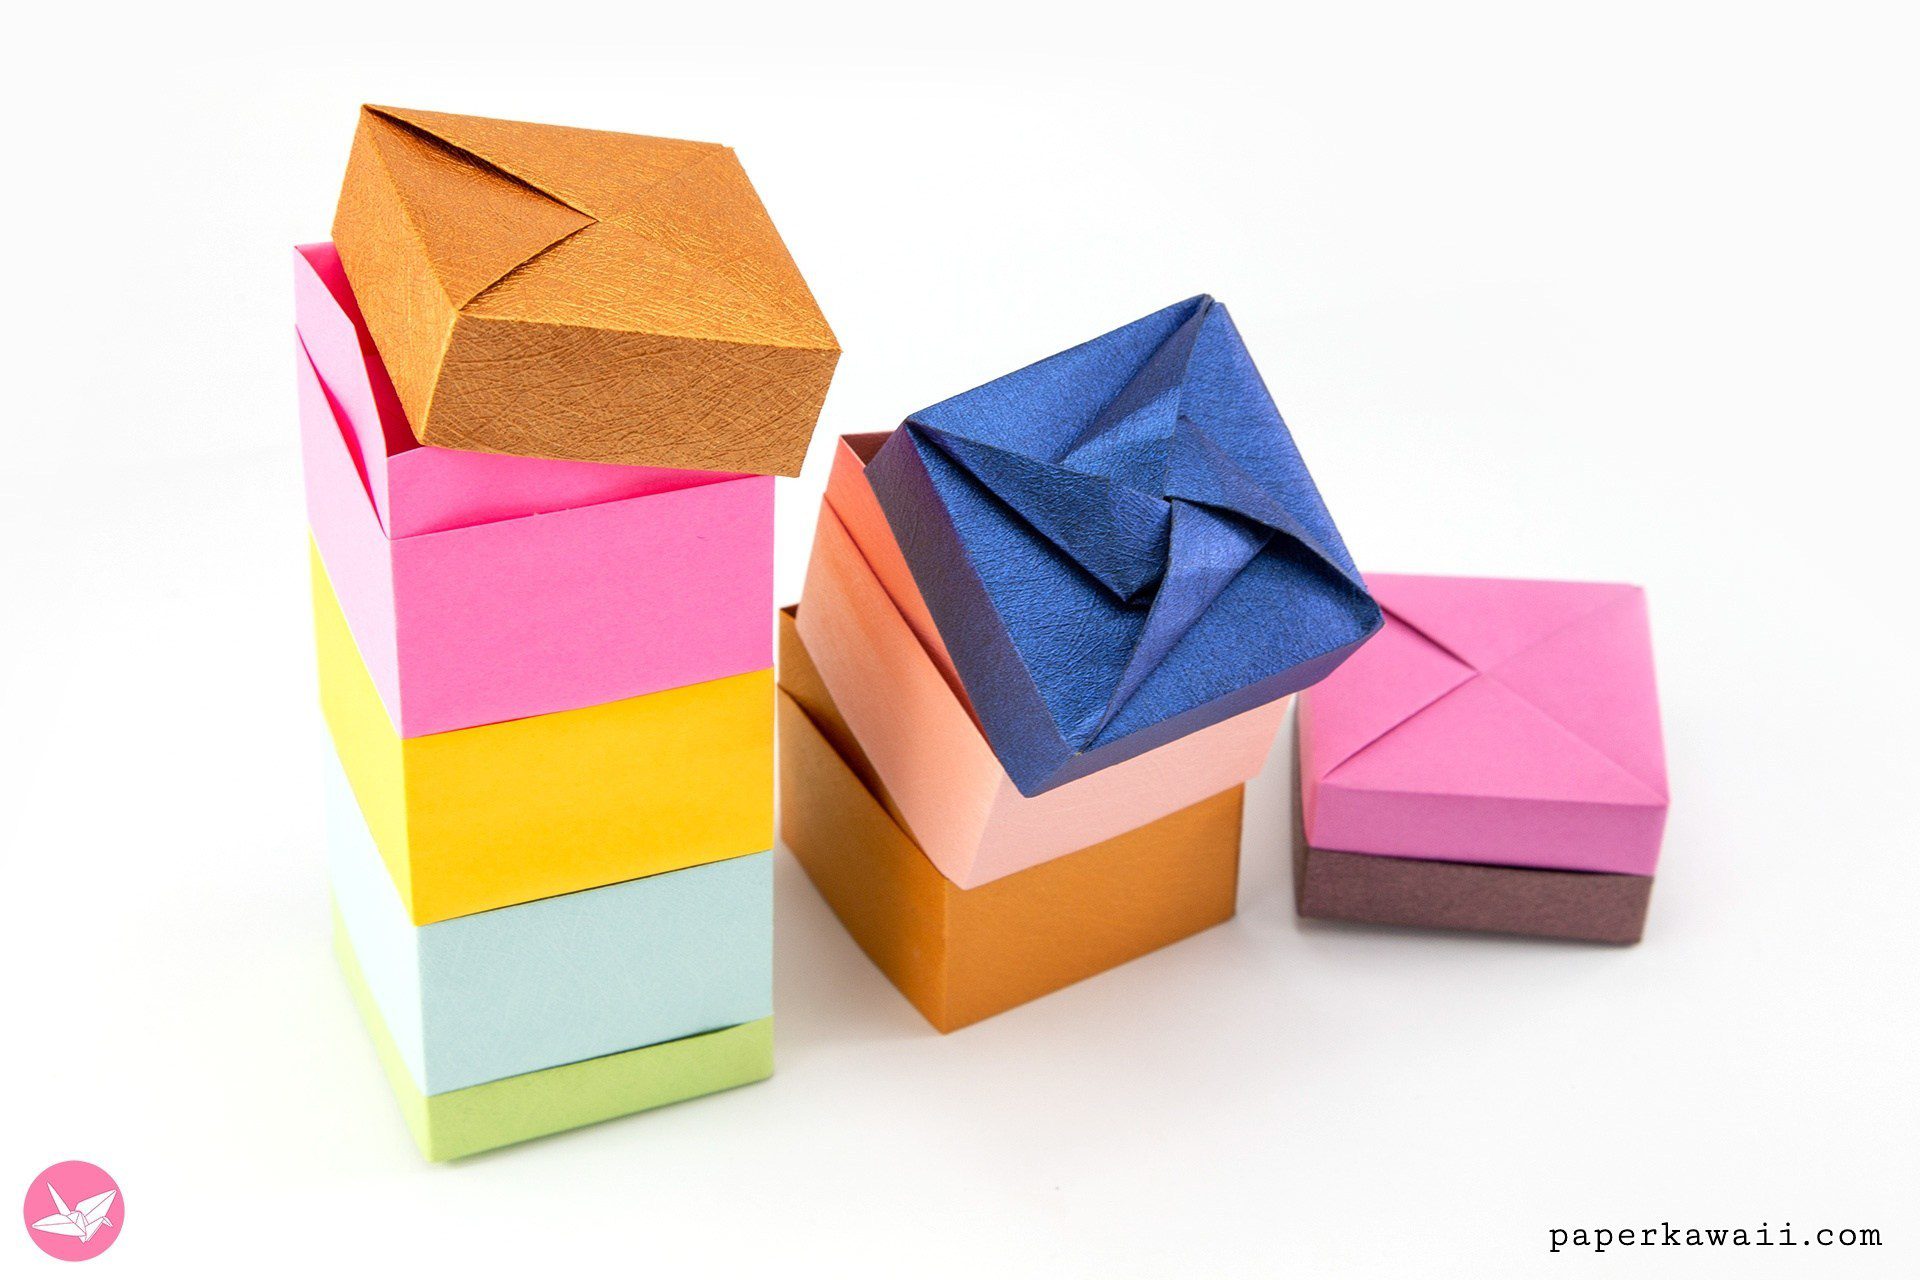 https://shop.paperkawaii.com/wp-content/uploads/2020/06/origami-stacking-spice-box-tutorial-paper-kawaii-03-1.jpg